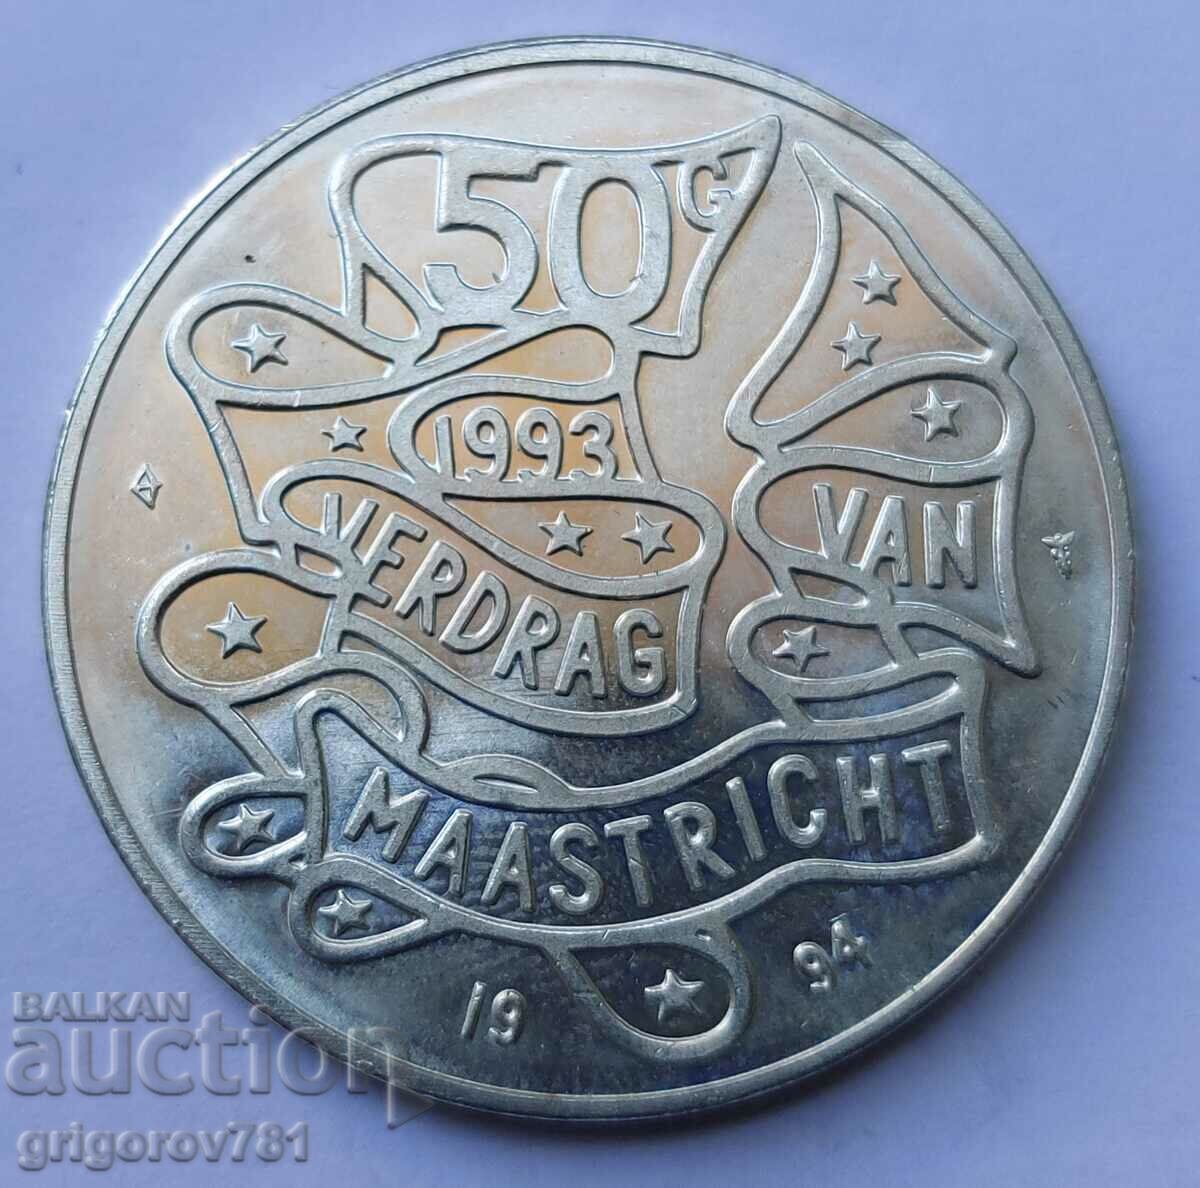 50 Guilder Silver Netherlands 1993 - Ασημένιο νόμισμα #9